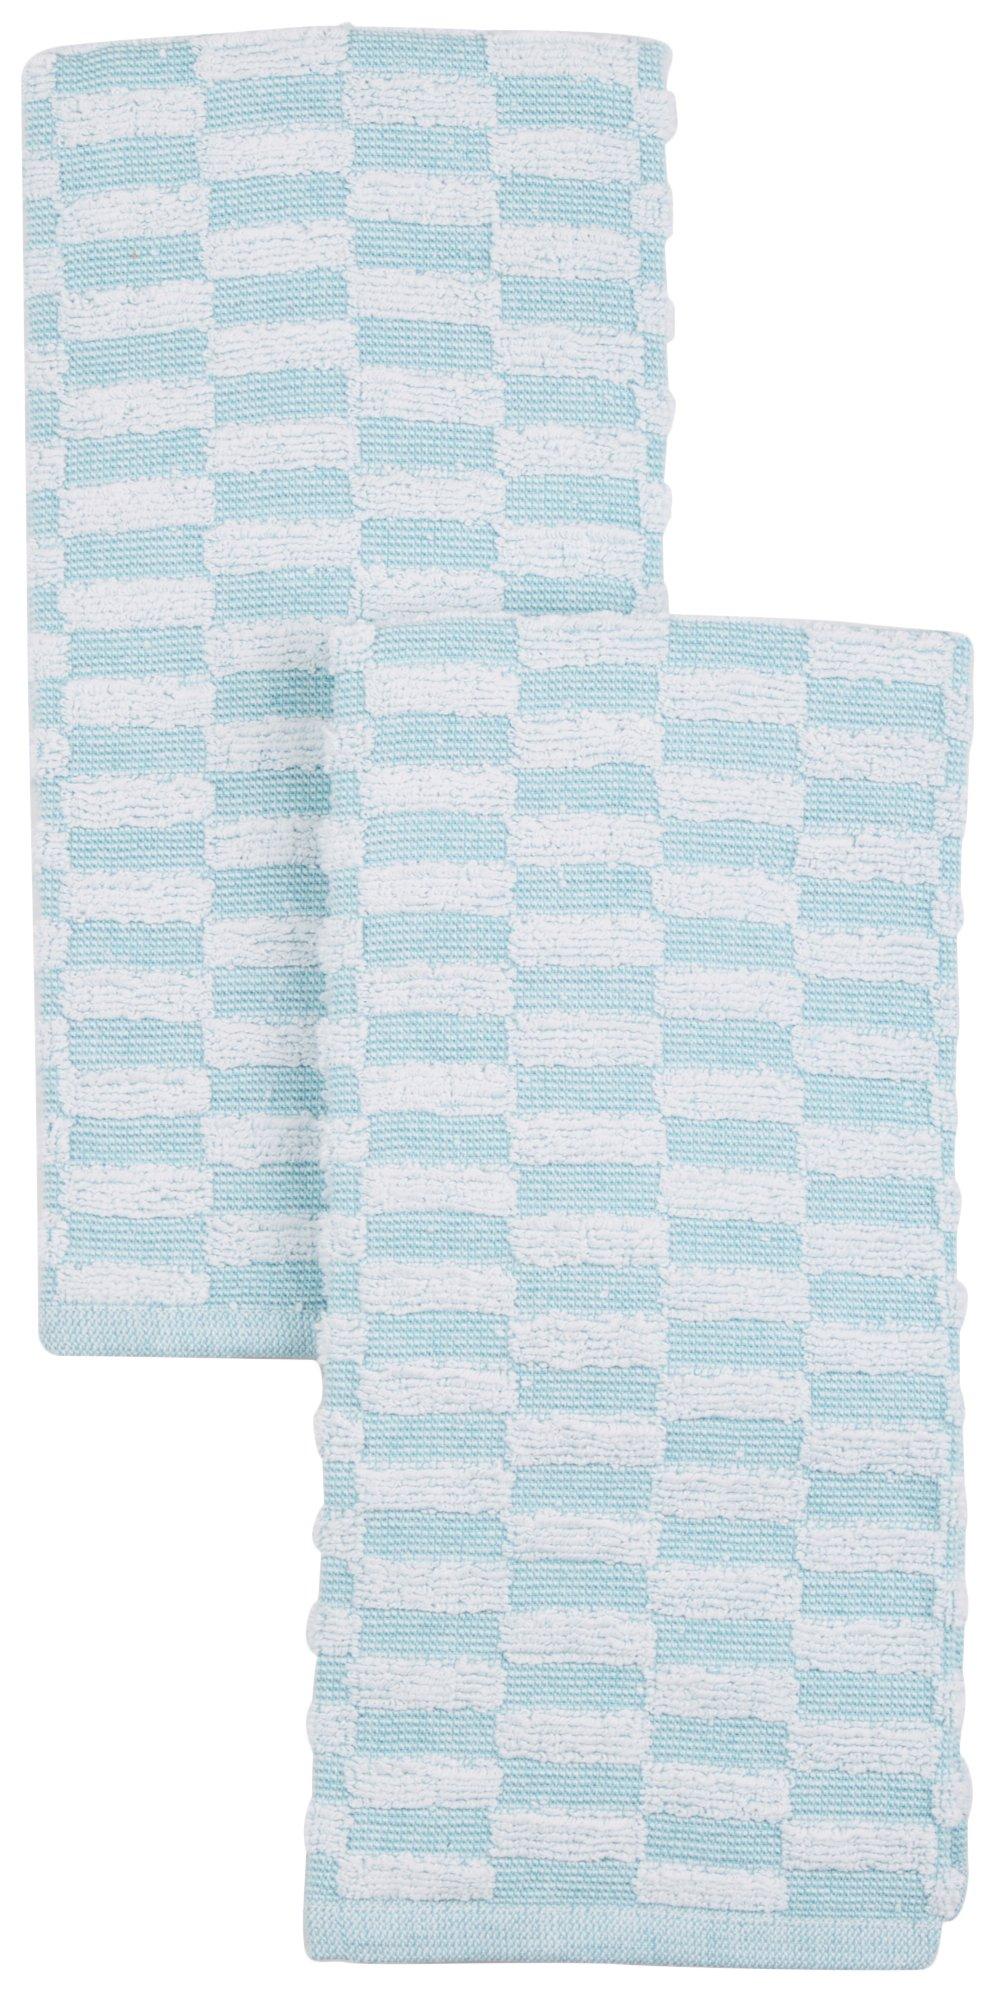 2 Pk 18x28 Checkered Kitchen Towels